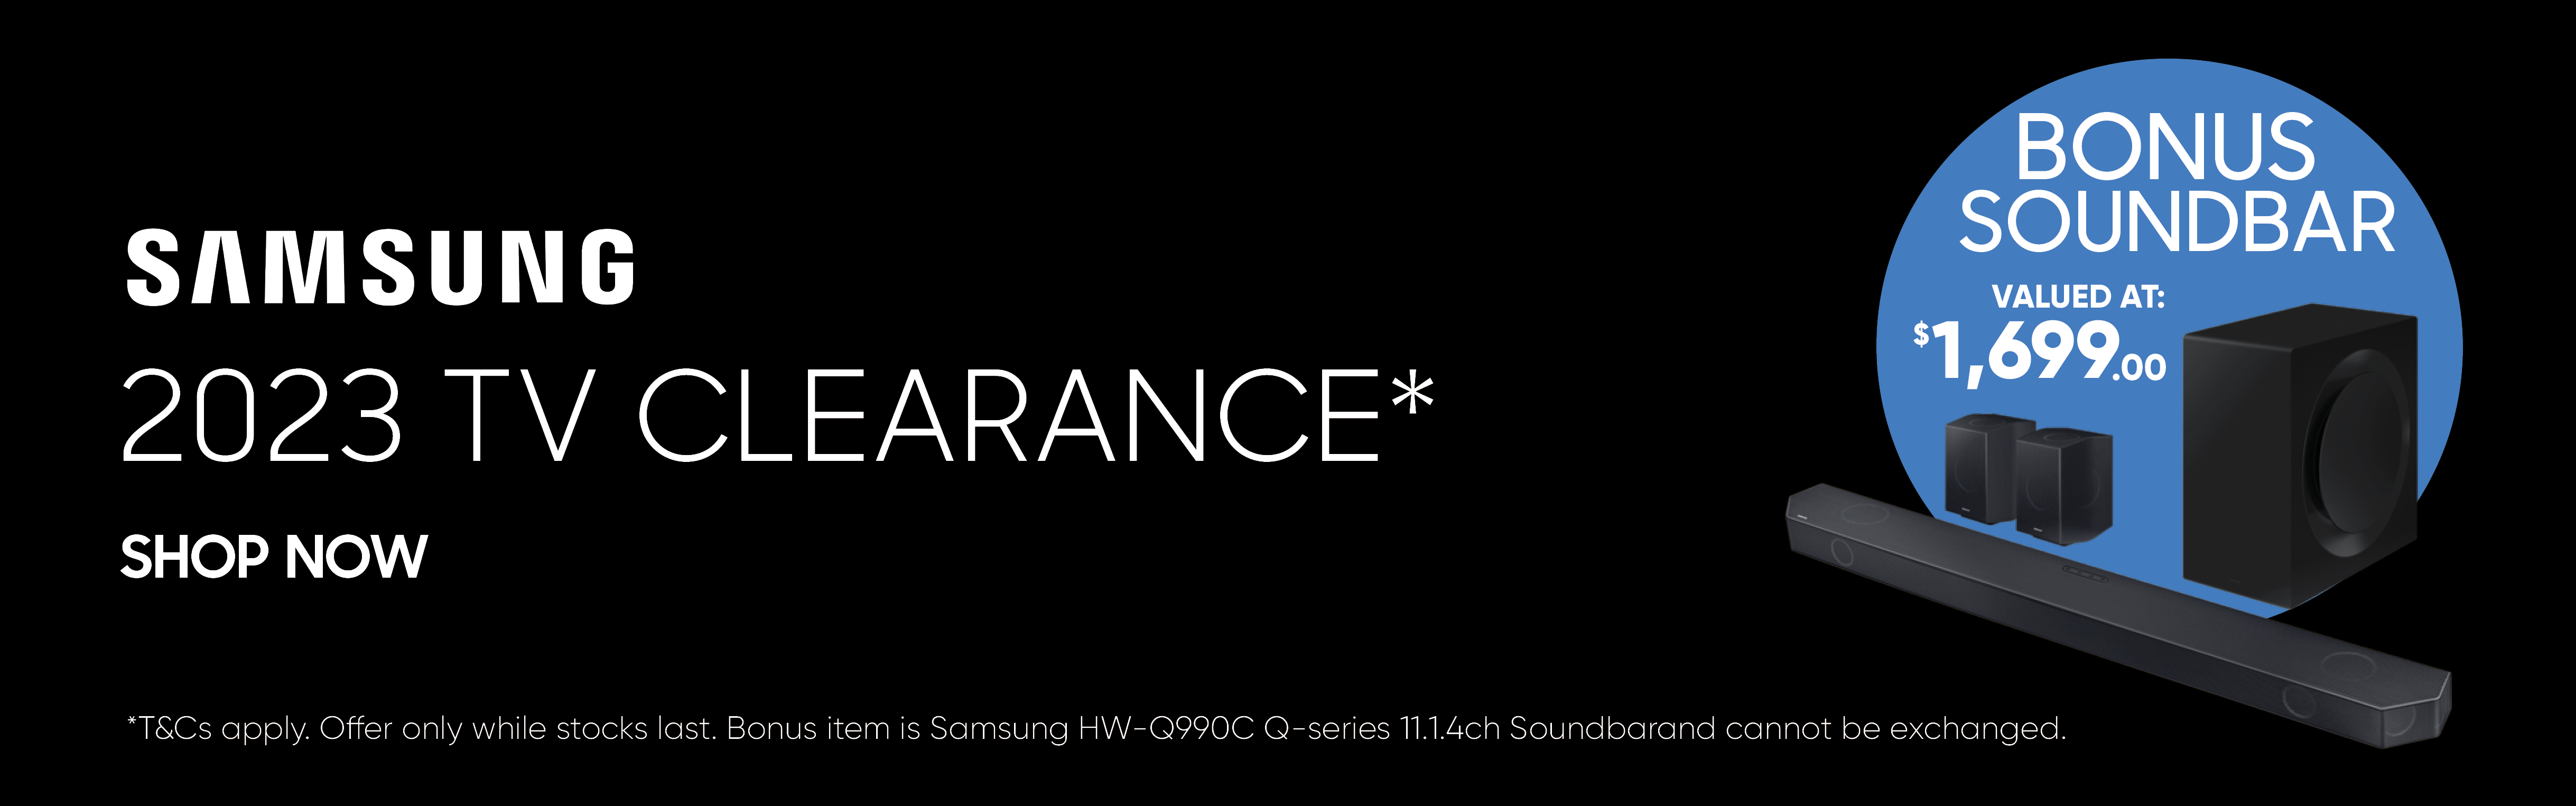 Samsung bonus soundbar clearance promo